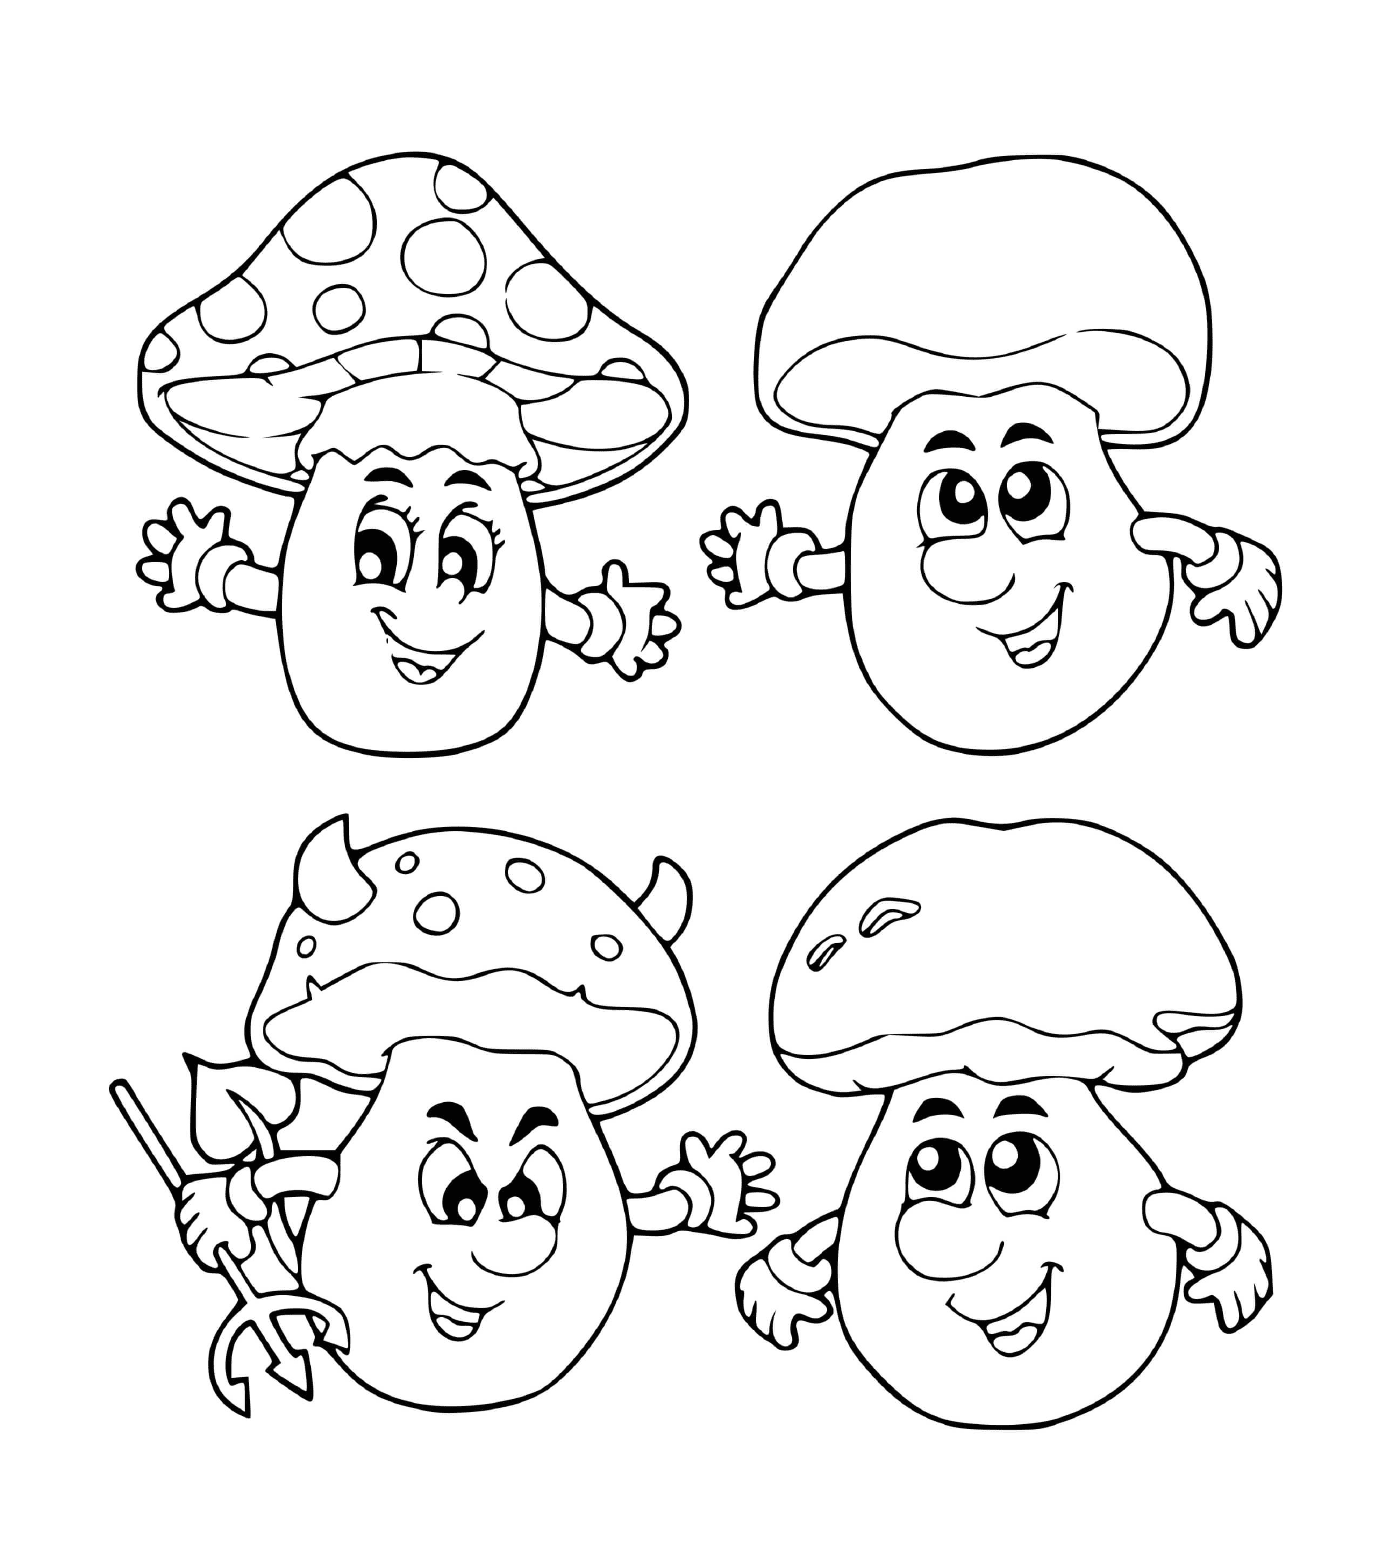  Quattro funghi bianchi e neri 